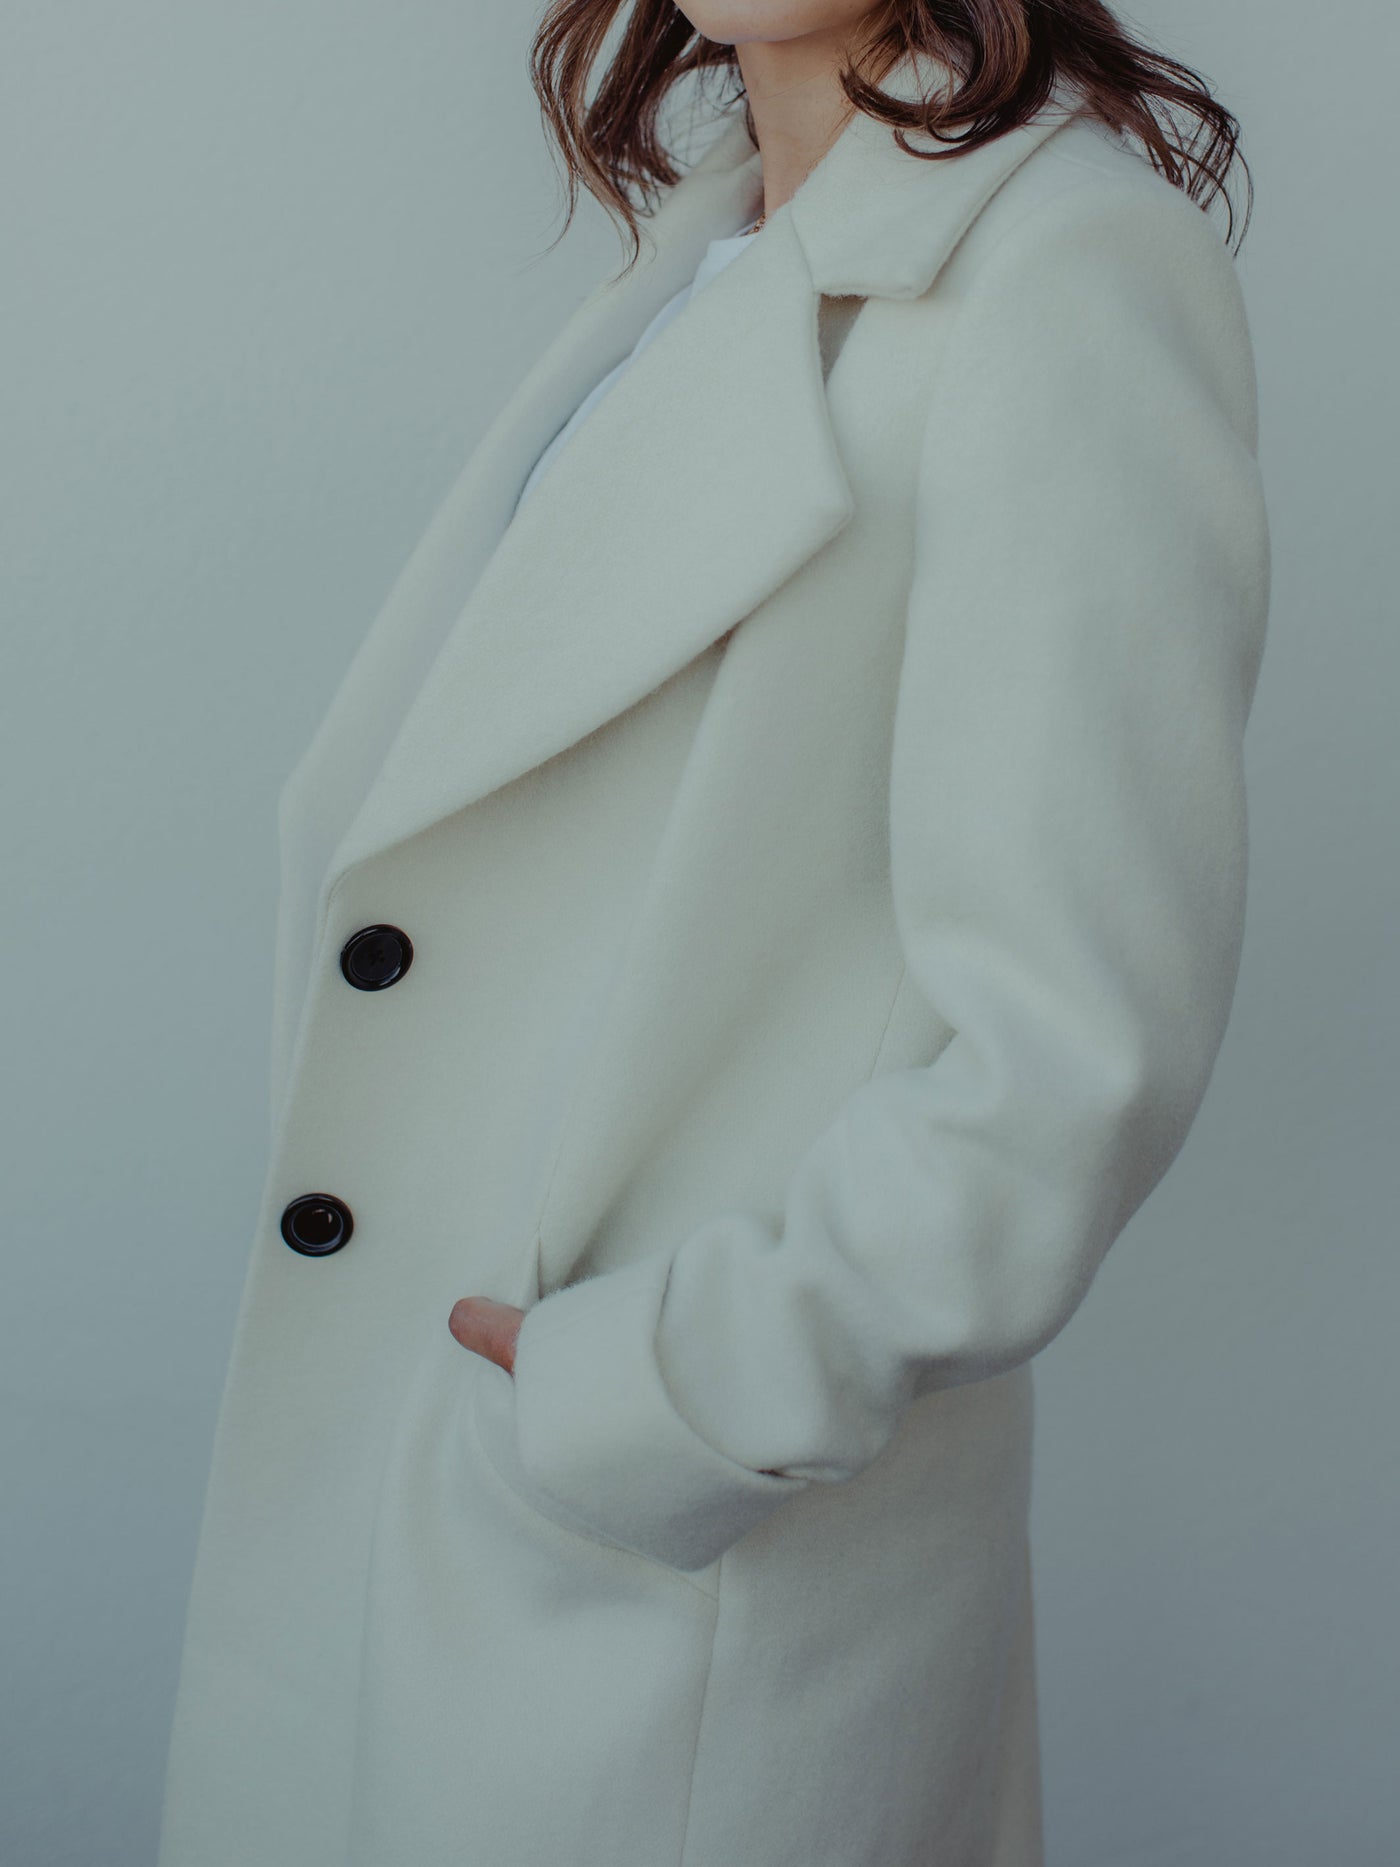 Miss Denise | Wool Coat